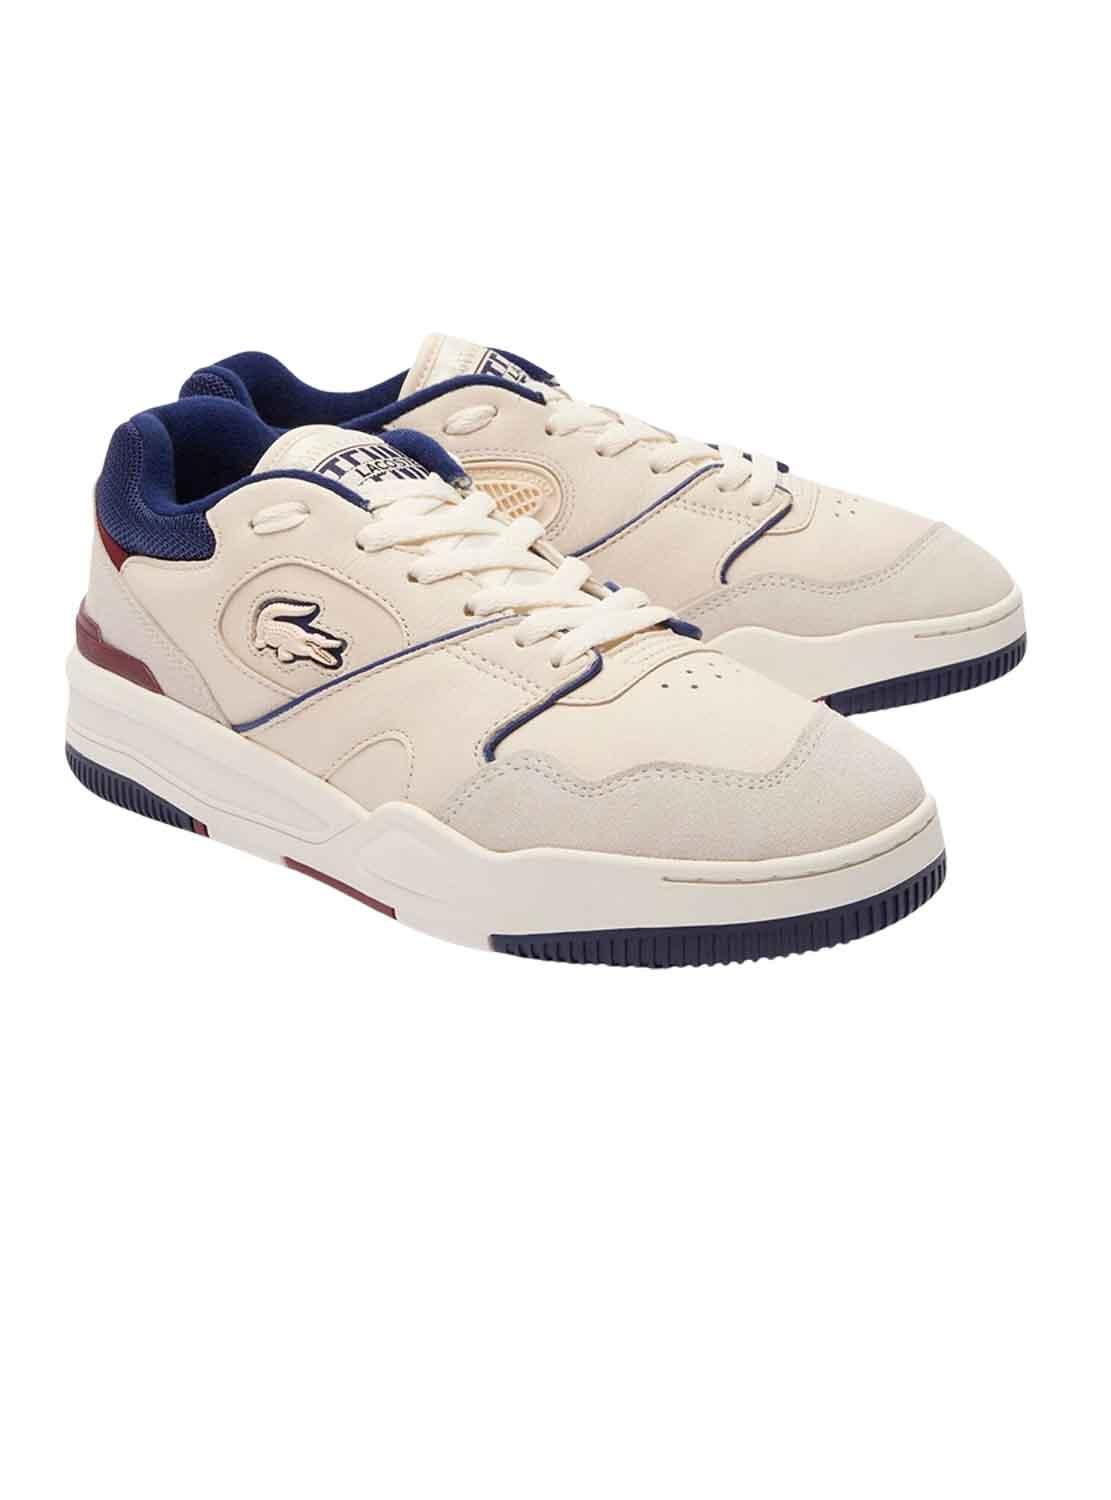 Sneakers Lacoste Lineshot Beige Blu Navy Uomo